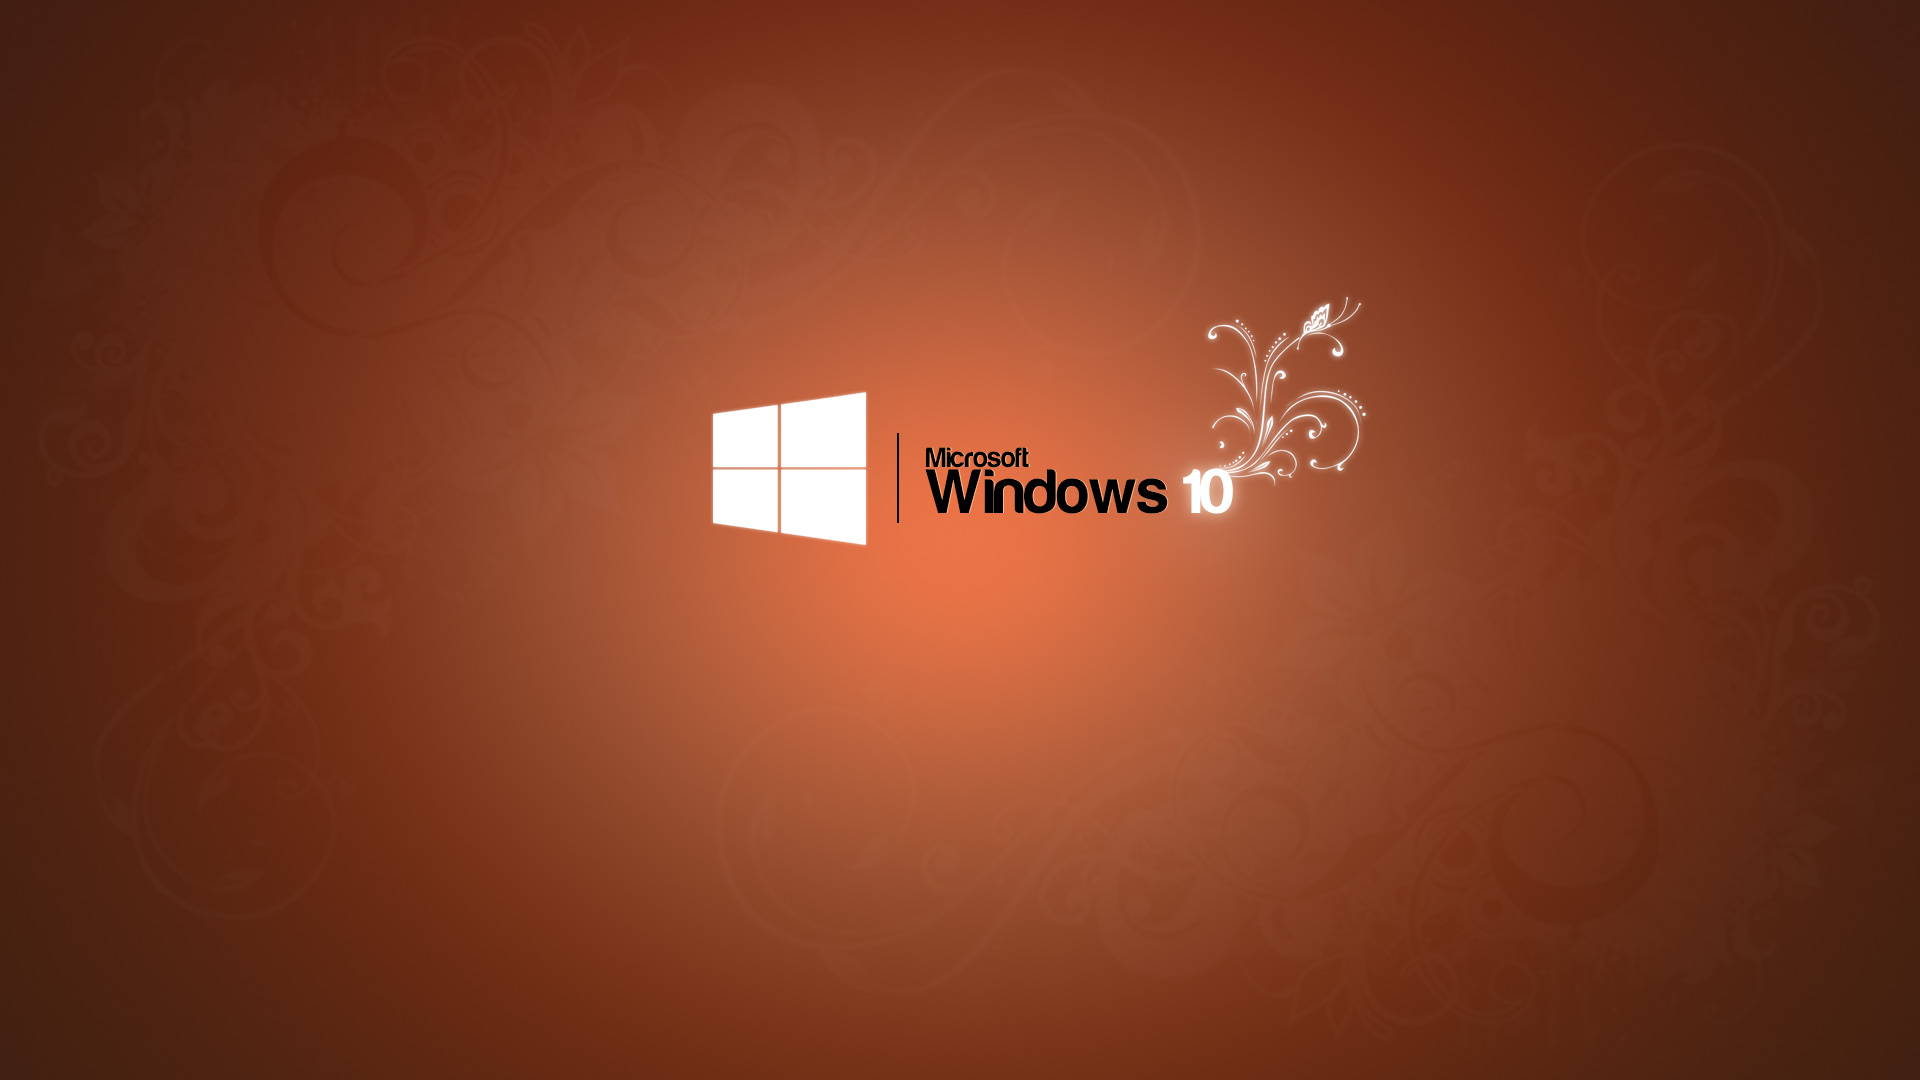 windows 10 windows 10 duvarkad windows 10 wallpaper